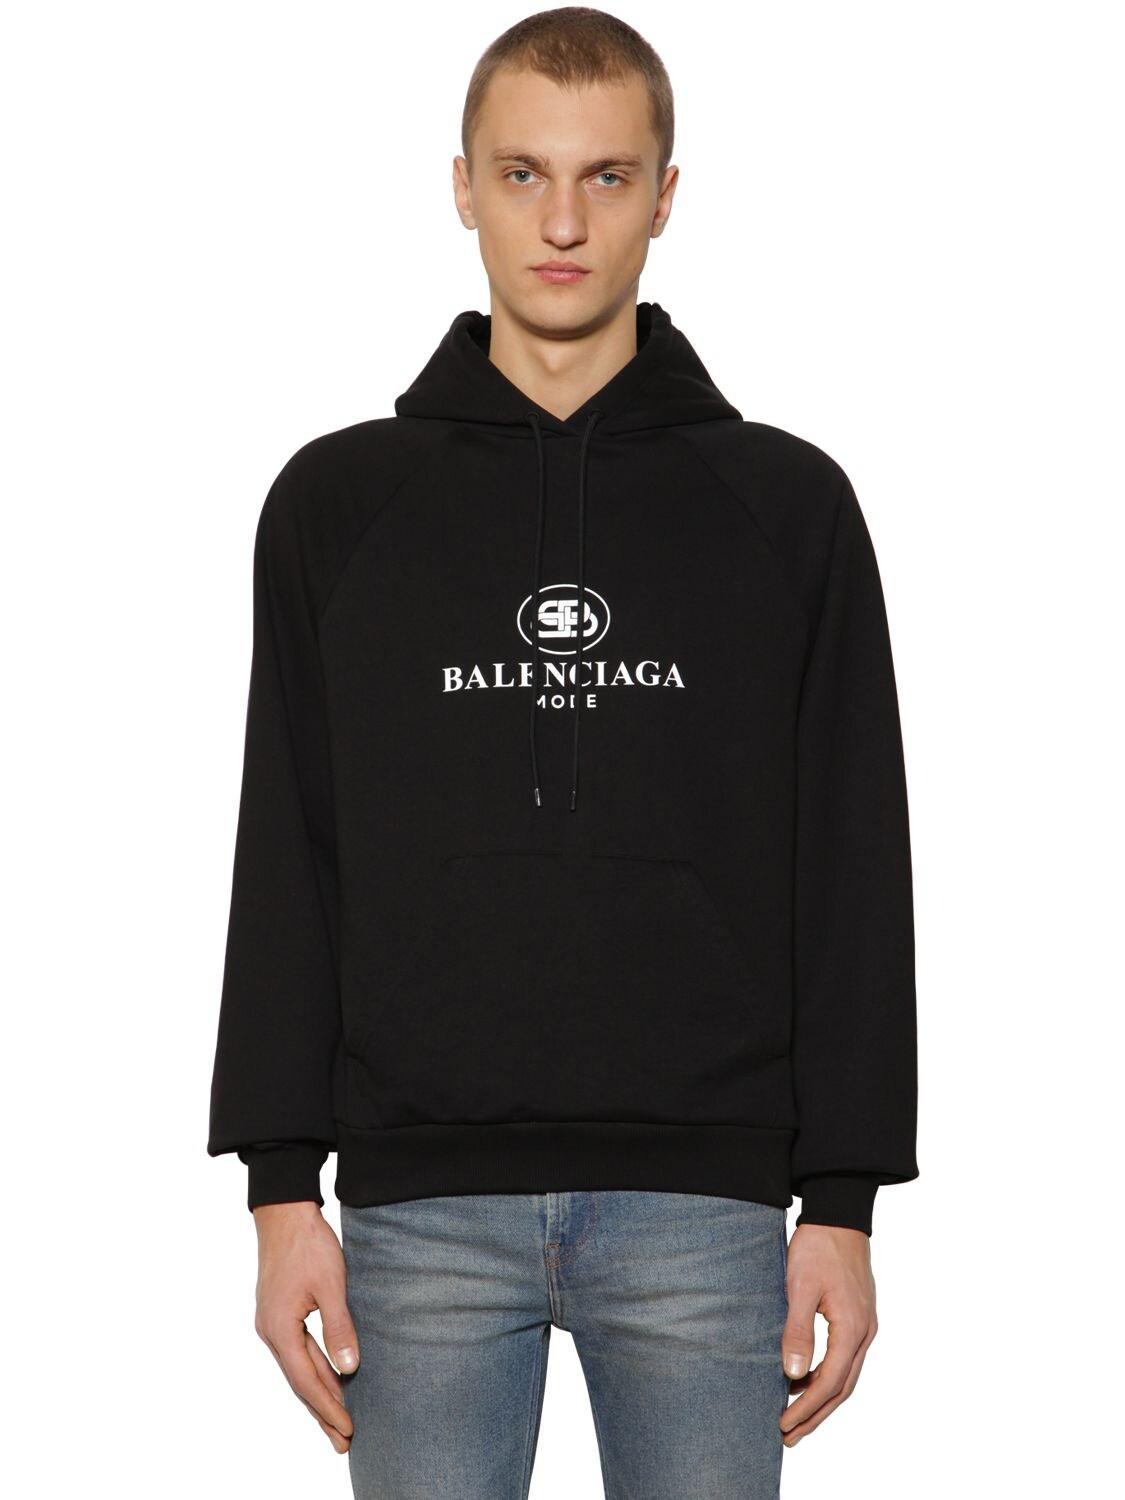 Balenciaga Bb Mode Logo Print Cotton Hoodie in Black for Men - Lyst